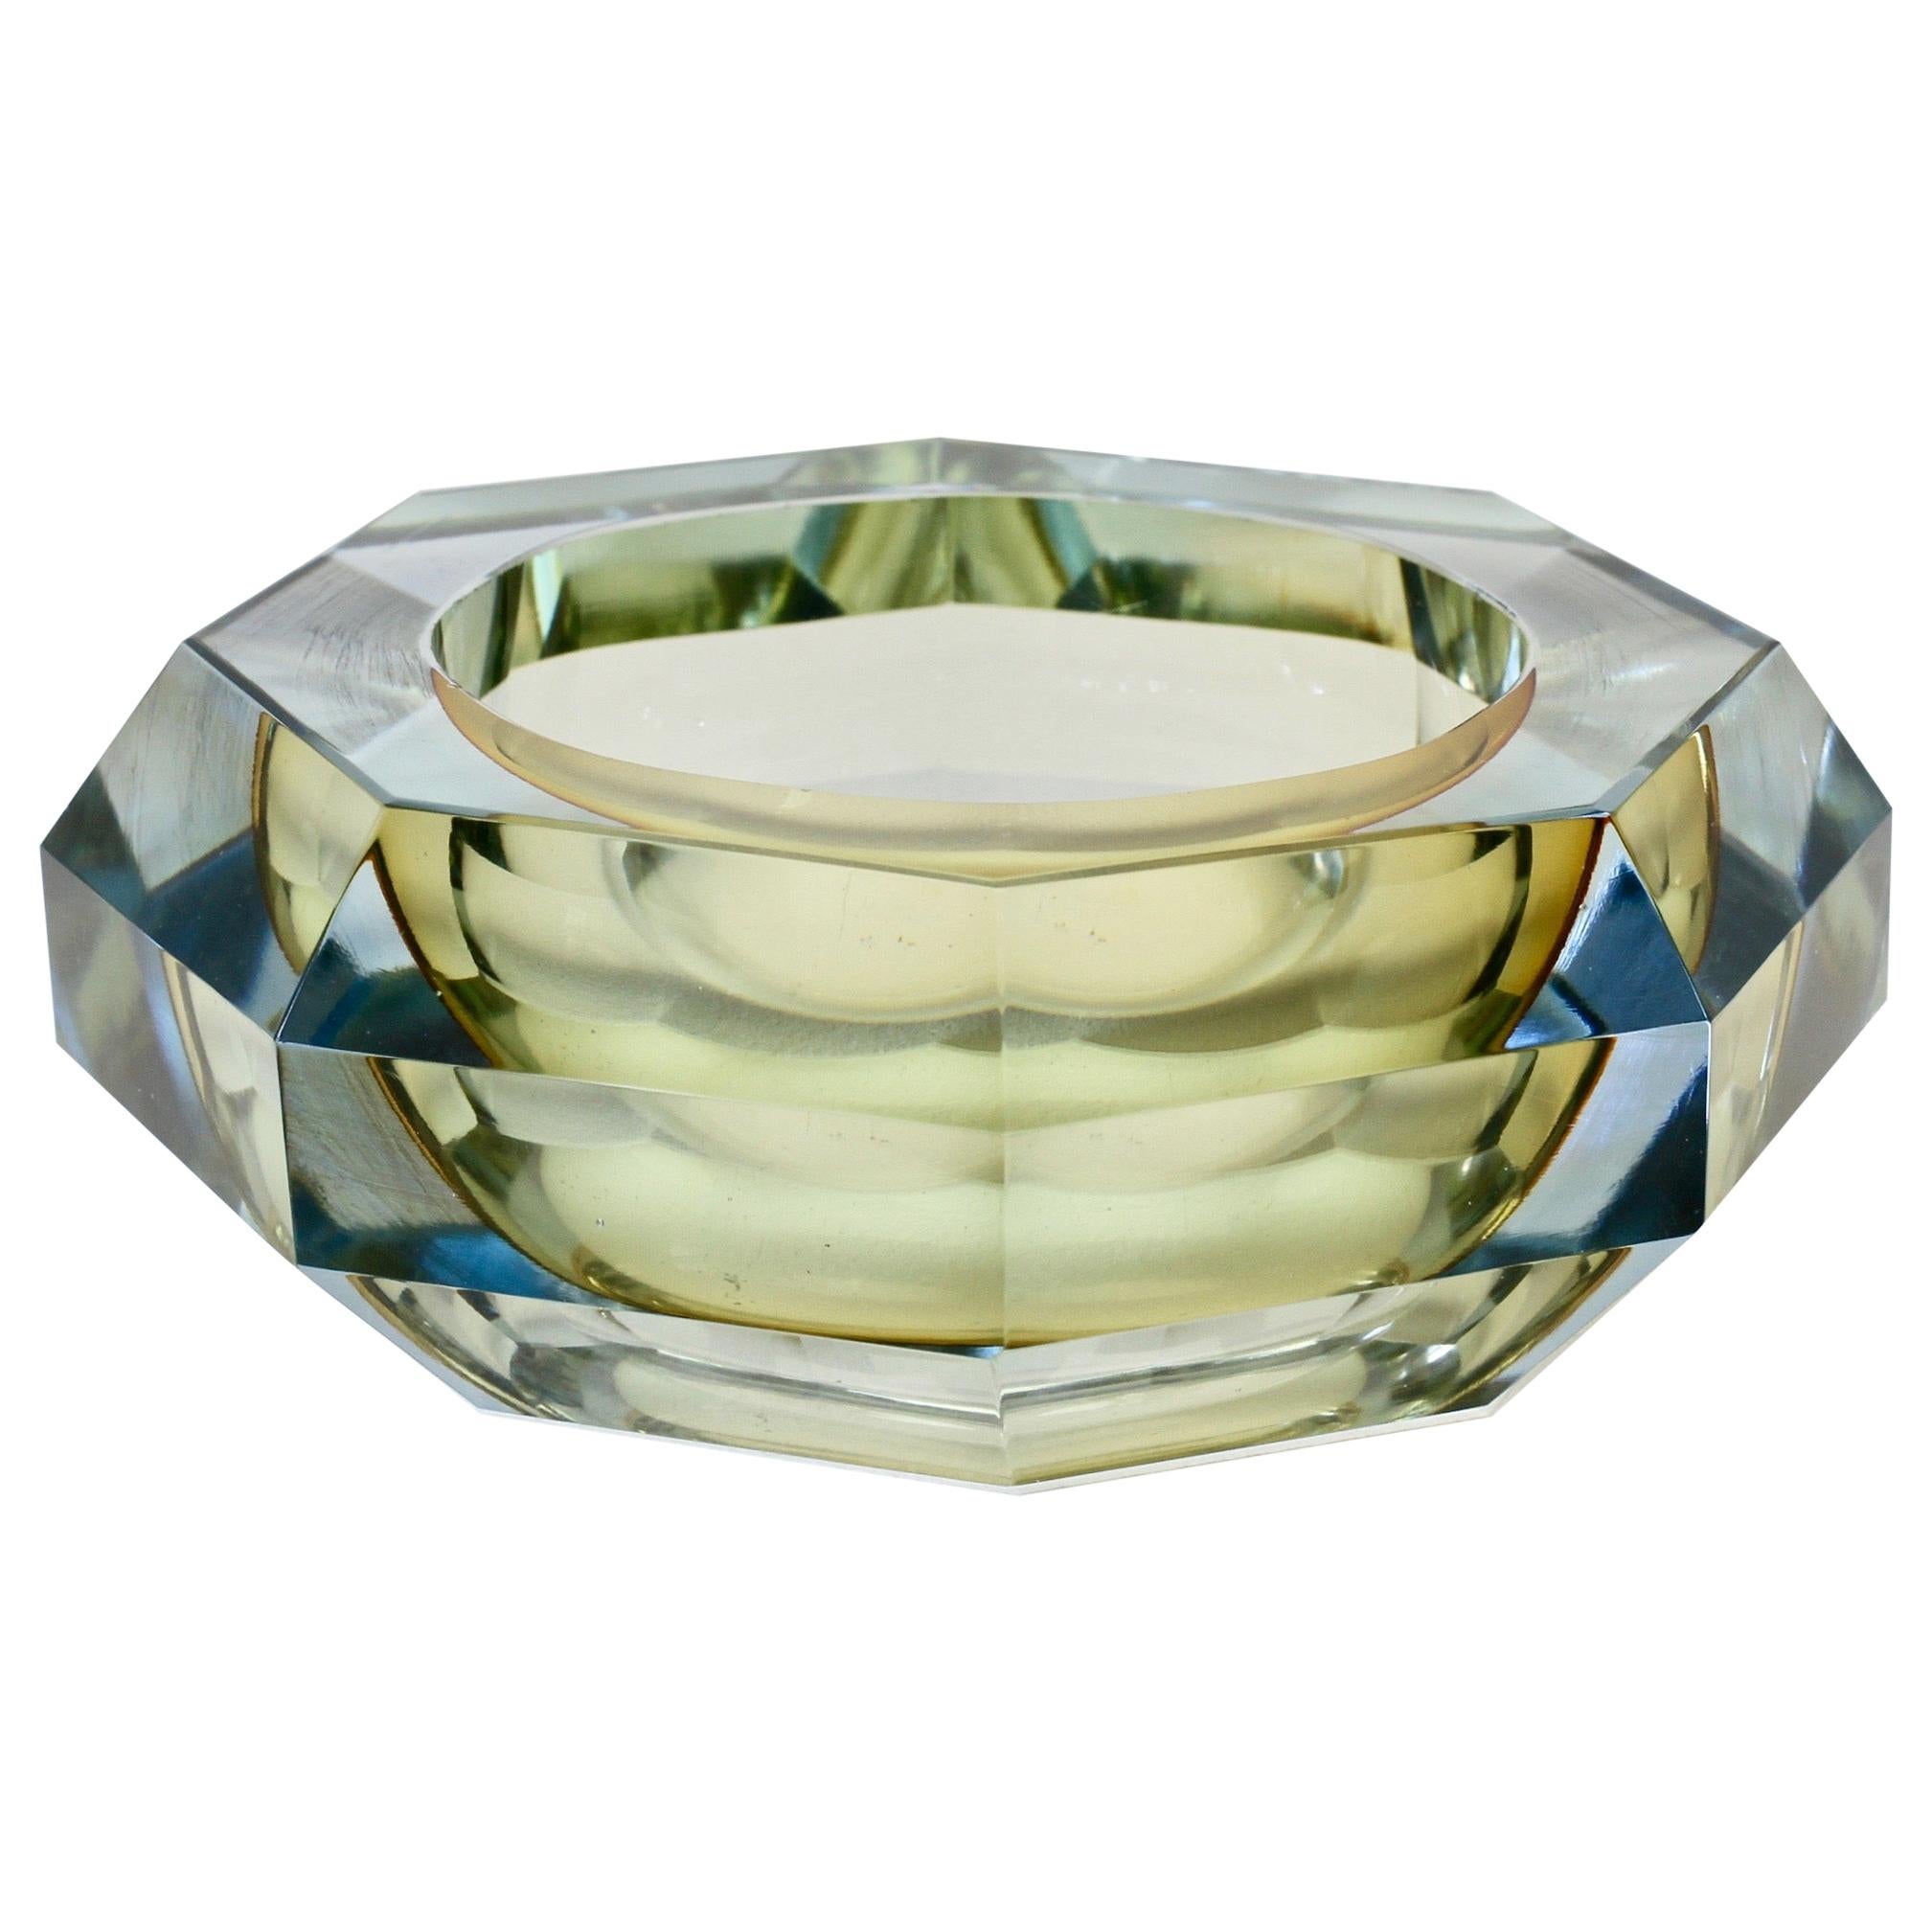 Faceted Murano Sommerso Diamond Cut Glass Bowl Attributed to Mandruzzato